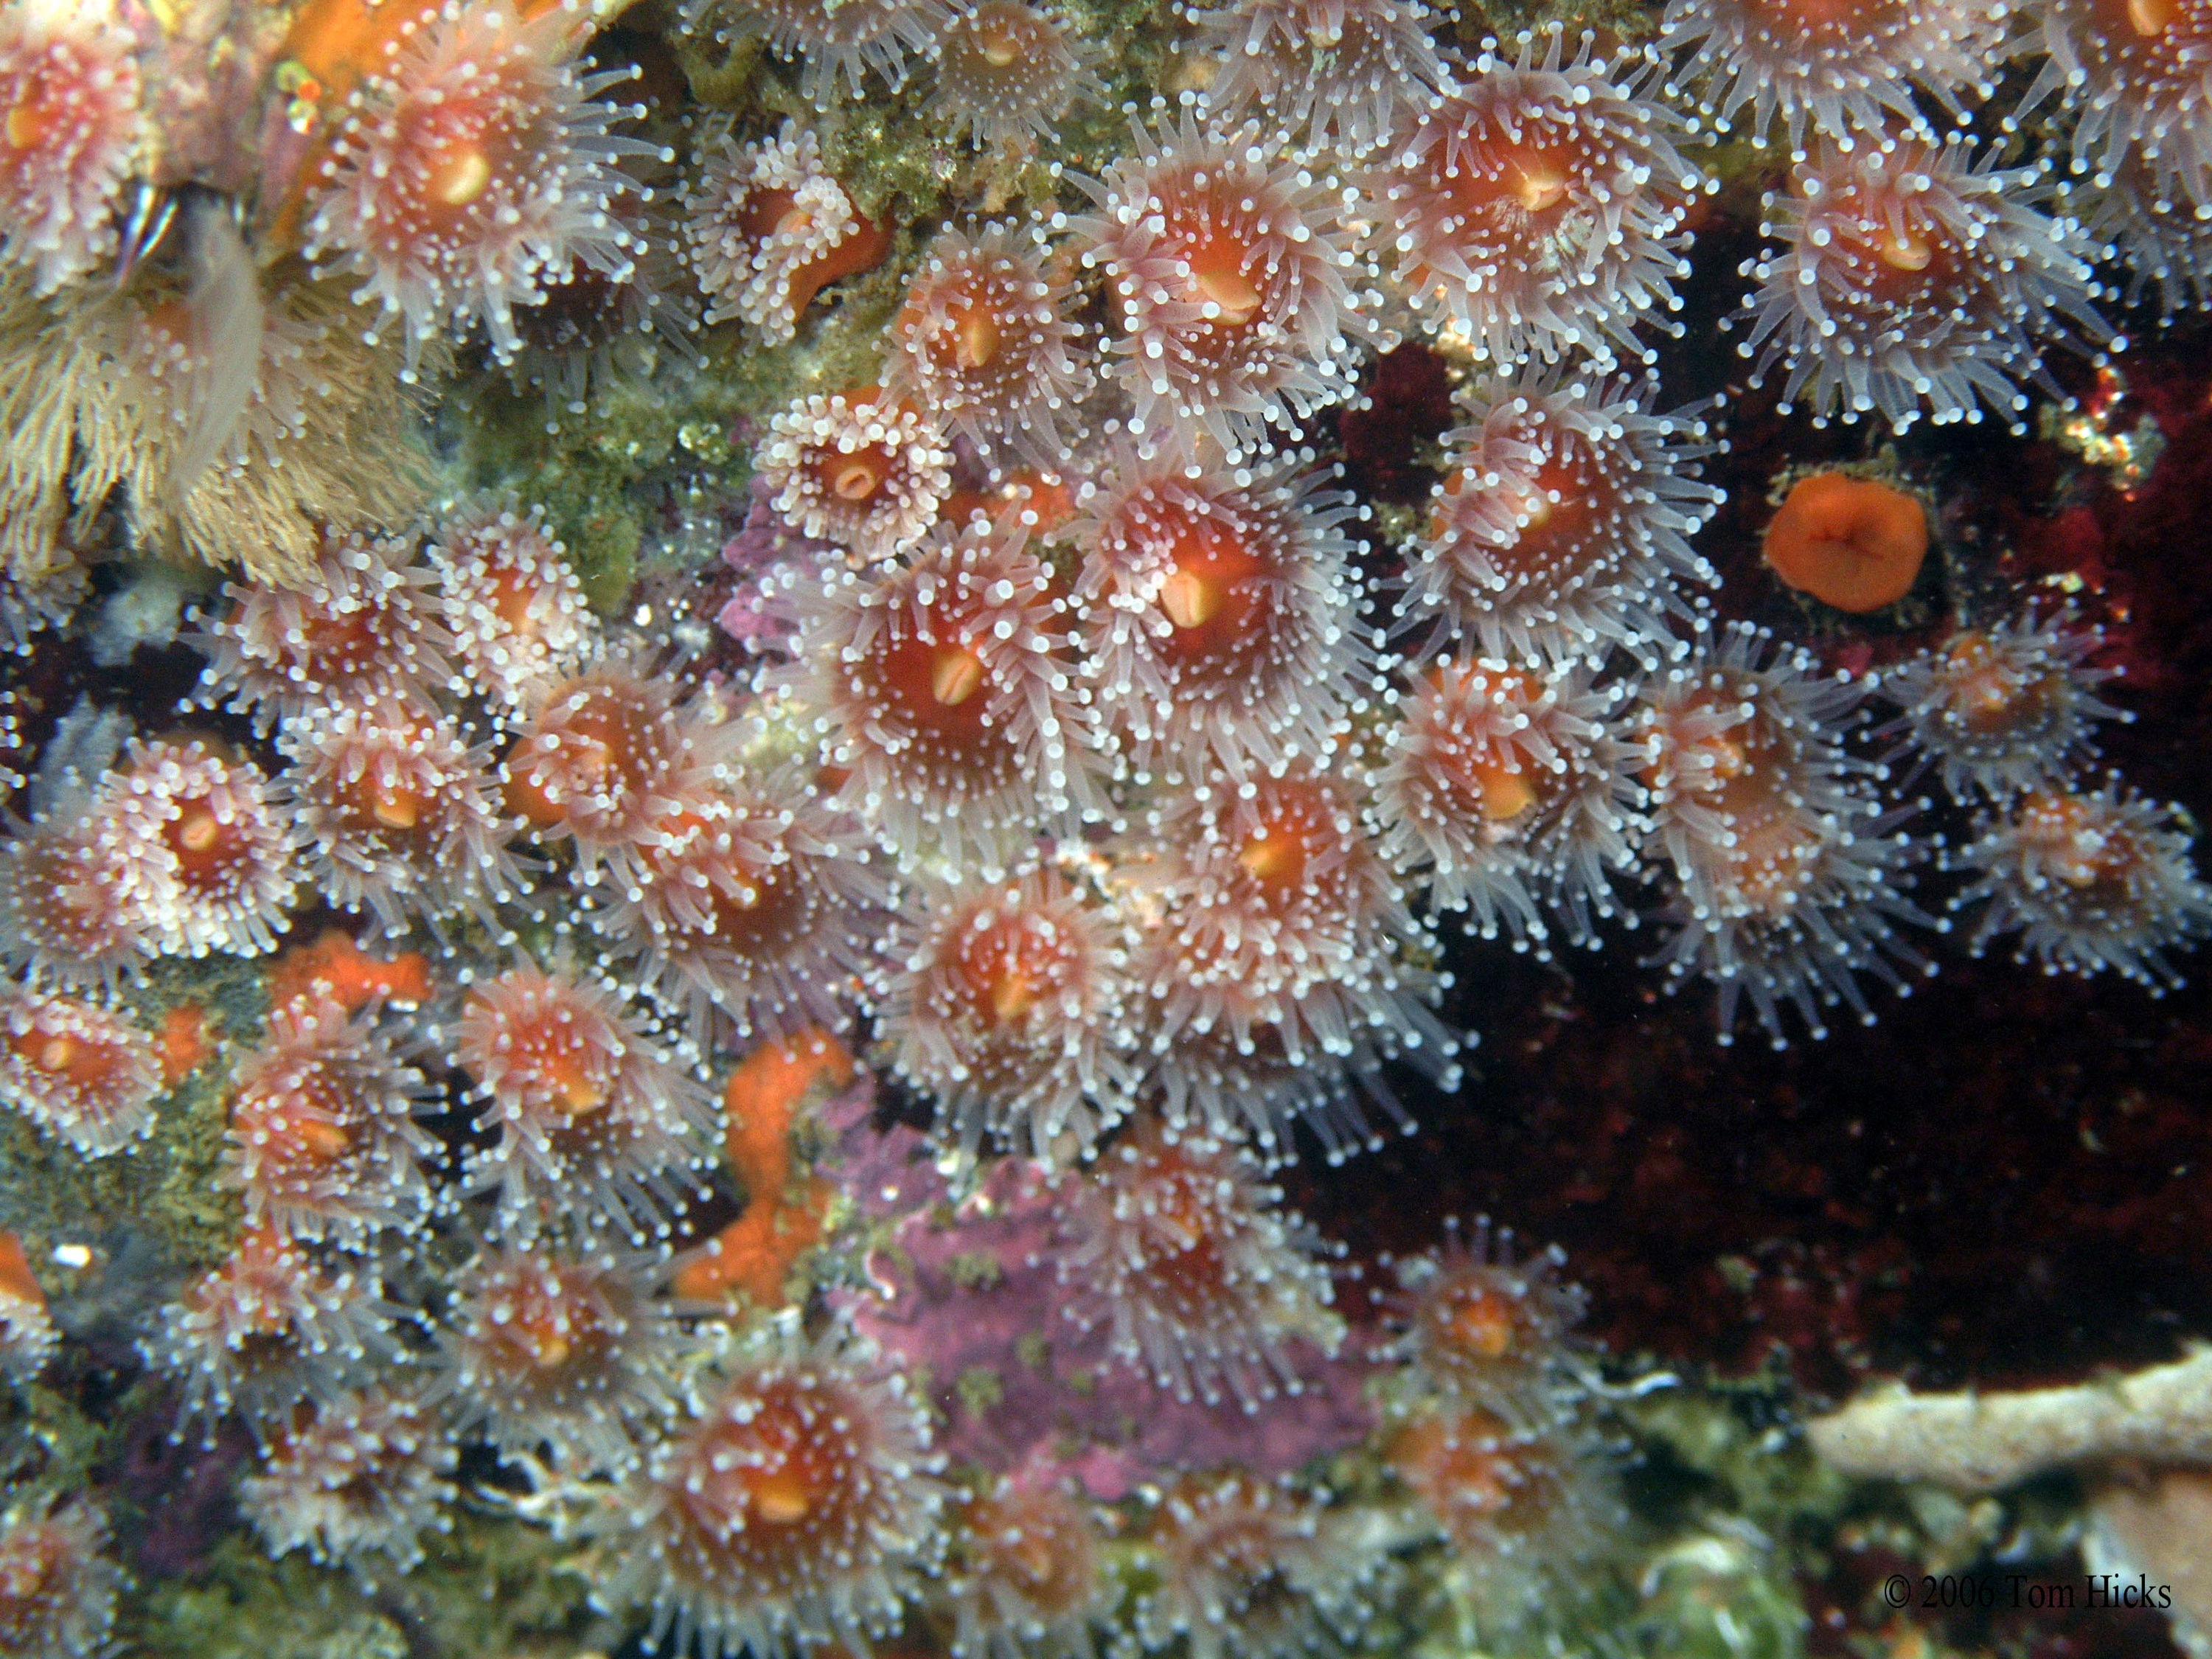 colonial Sea Anemone